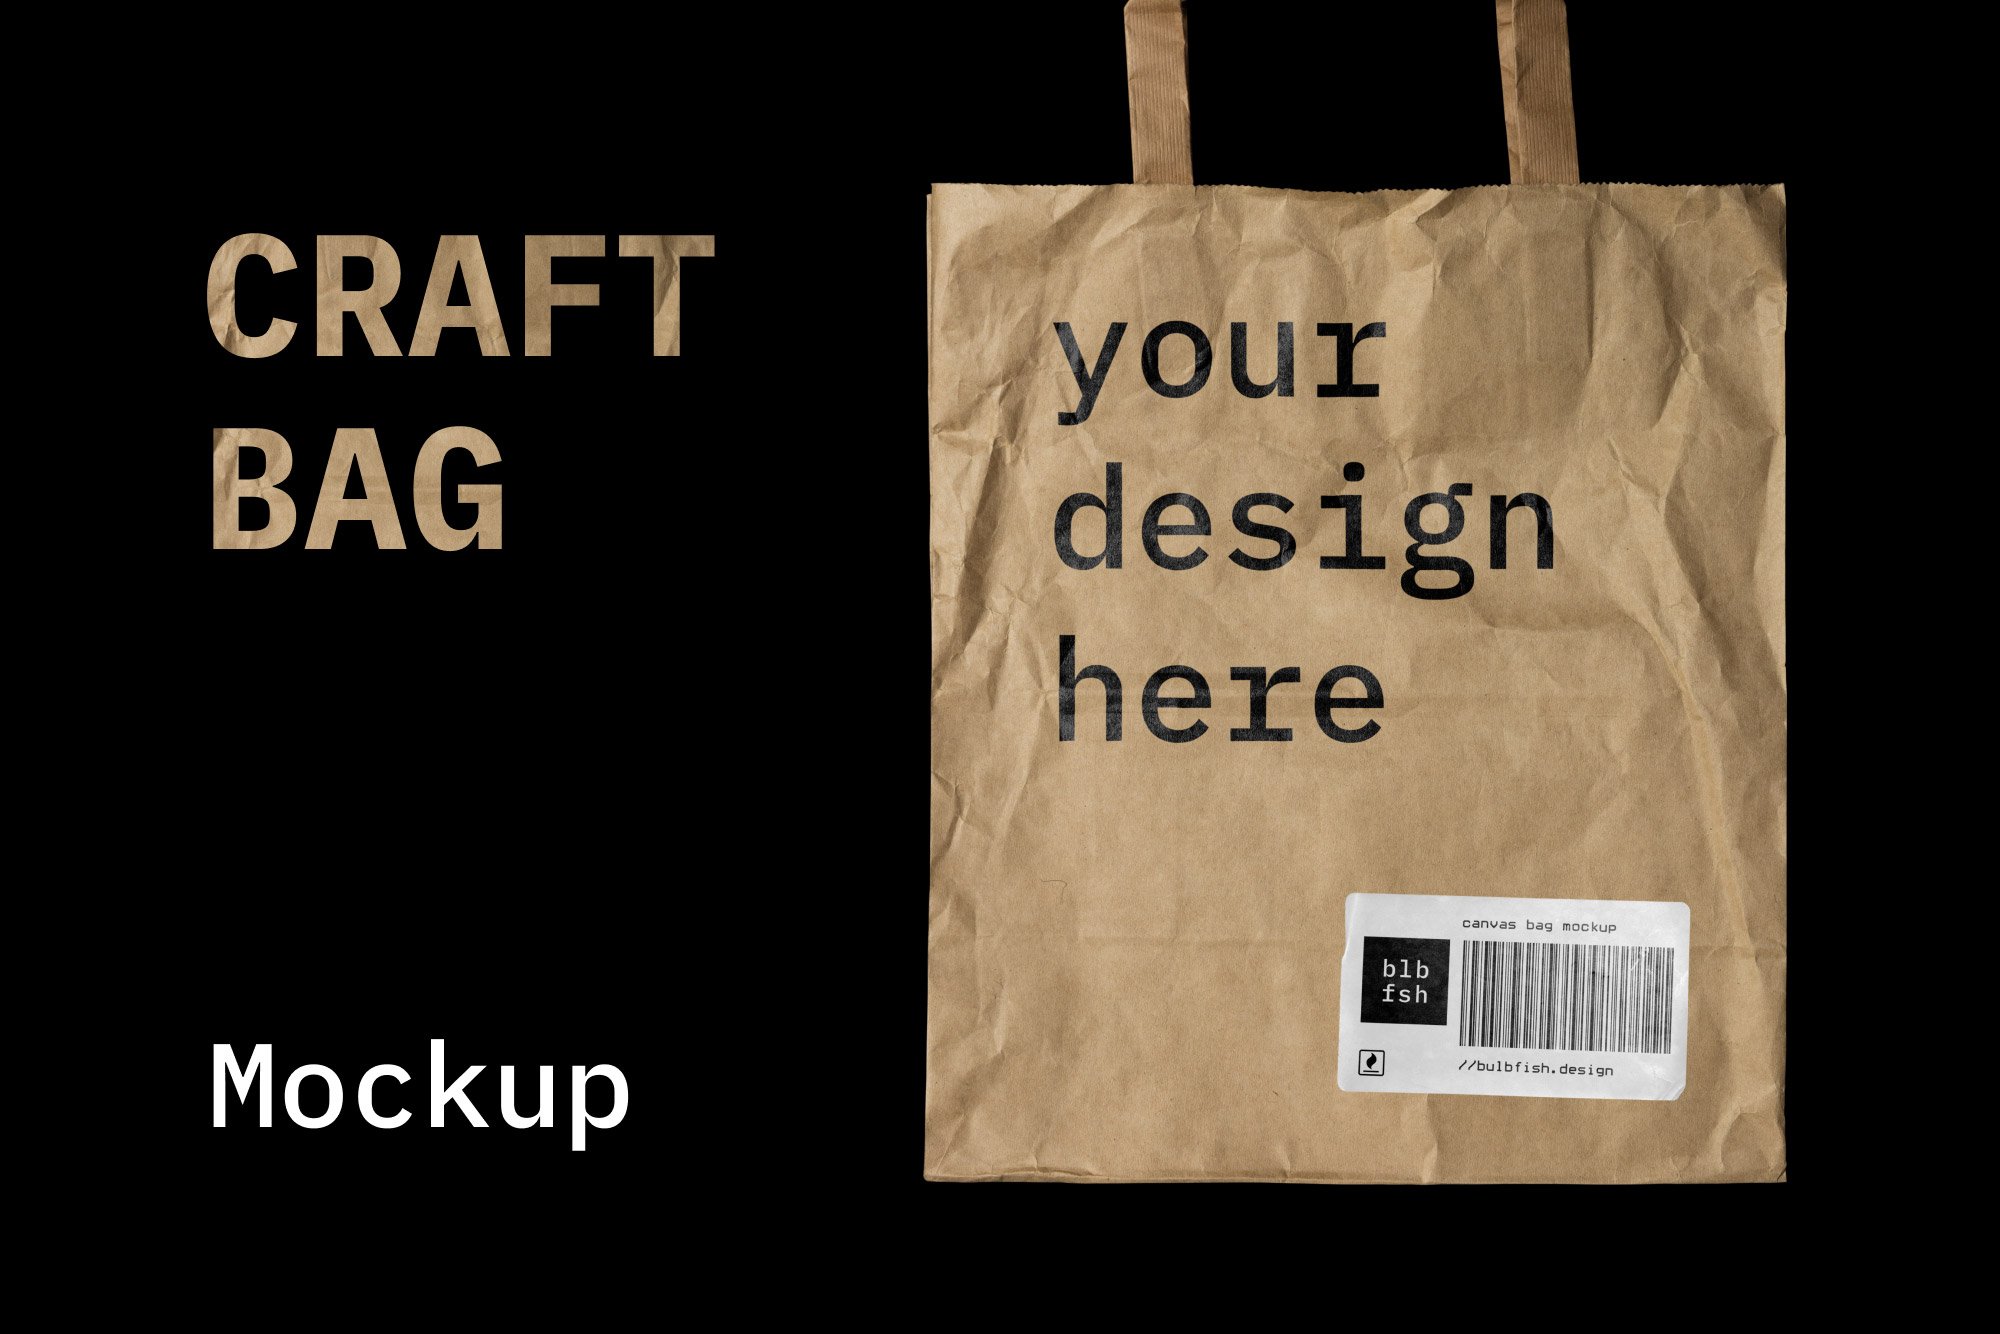 Craft Bag Mockup cover image.